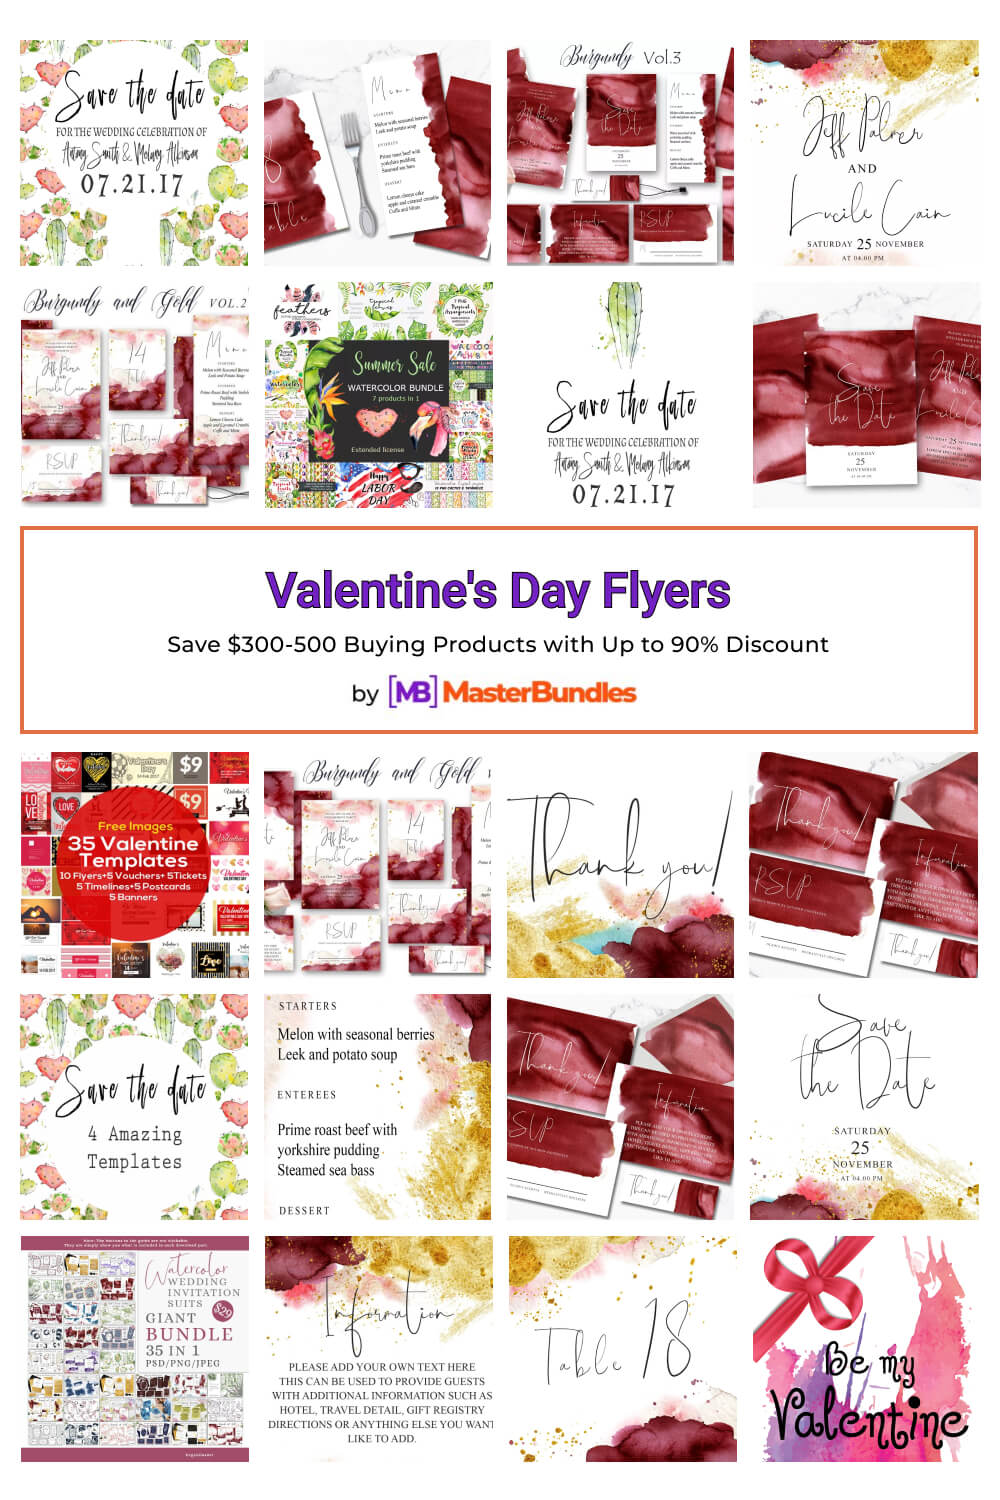 valentines day flyers pinterest image.